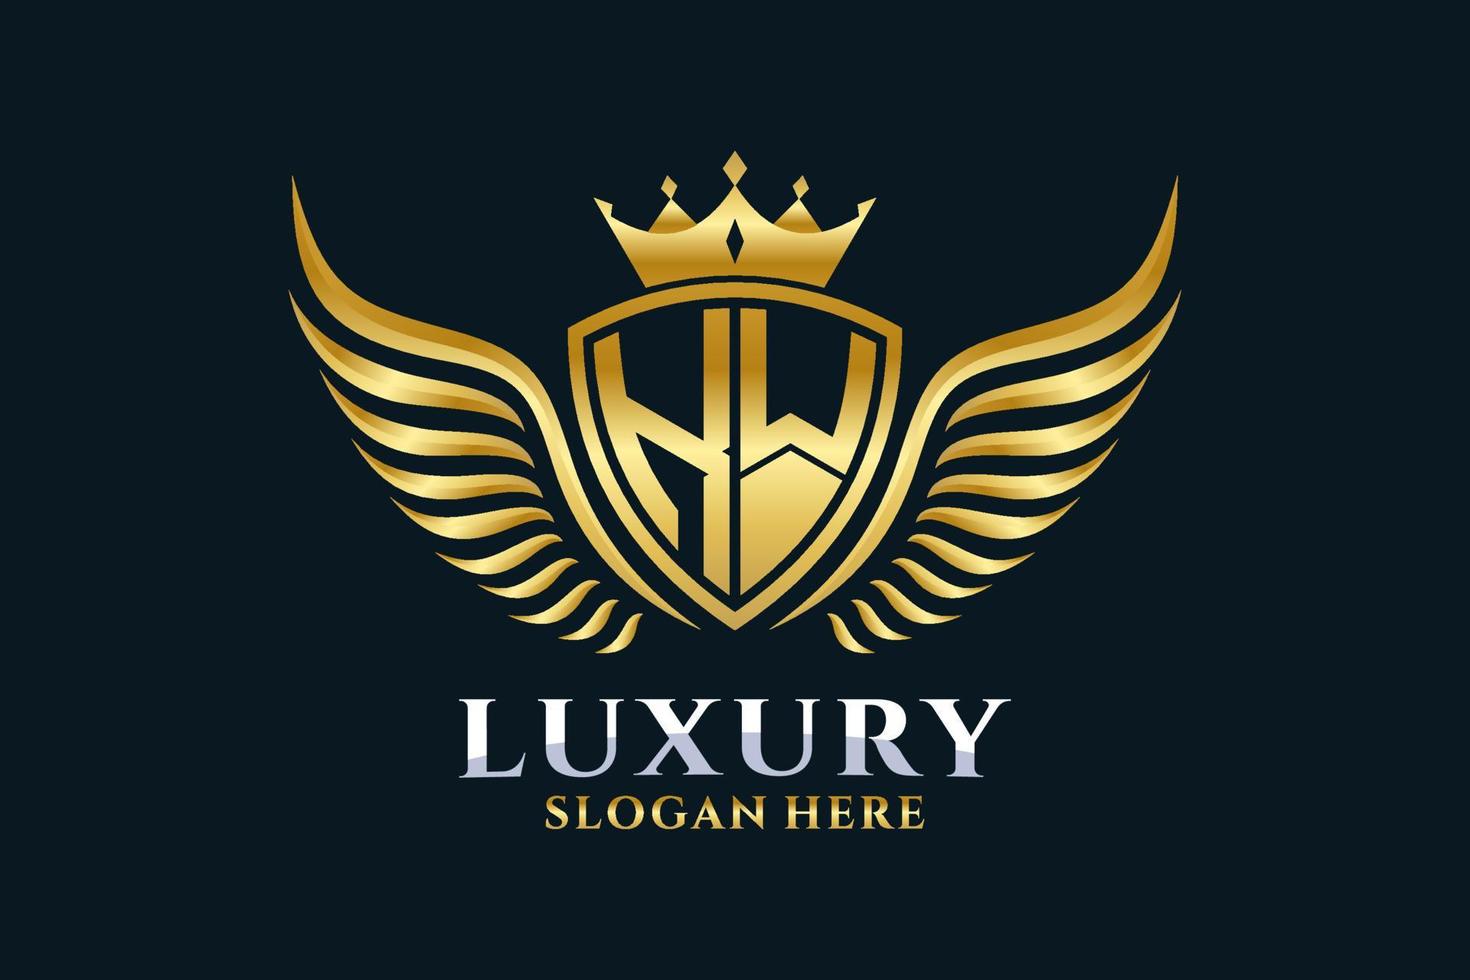 luxe Koninklijk vleugel brief kw kam goud kleur logo vector, zege logo, kam logo, vleugel logo, vector logo sjabloon.